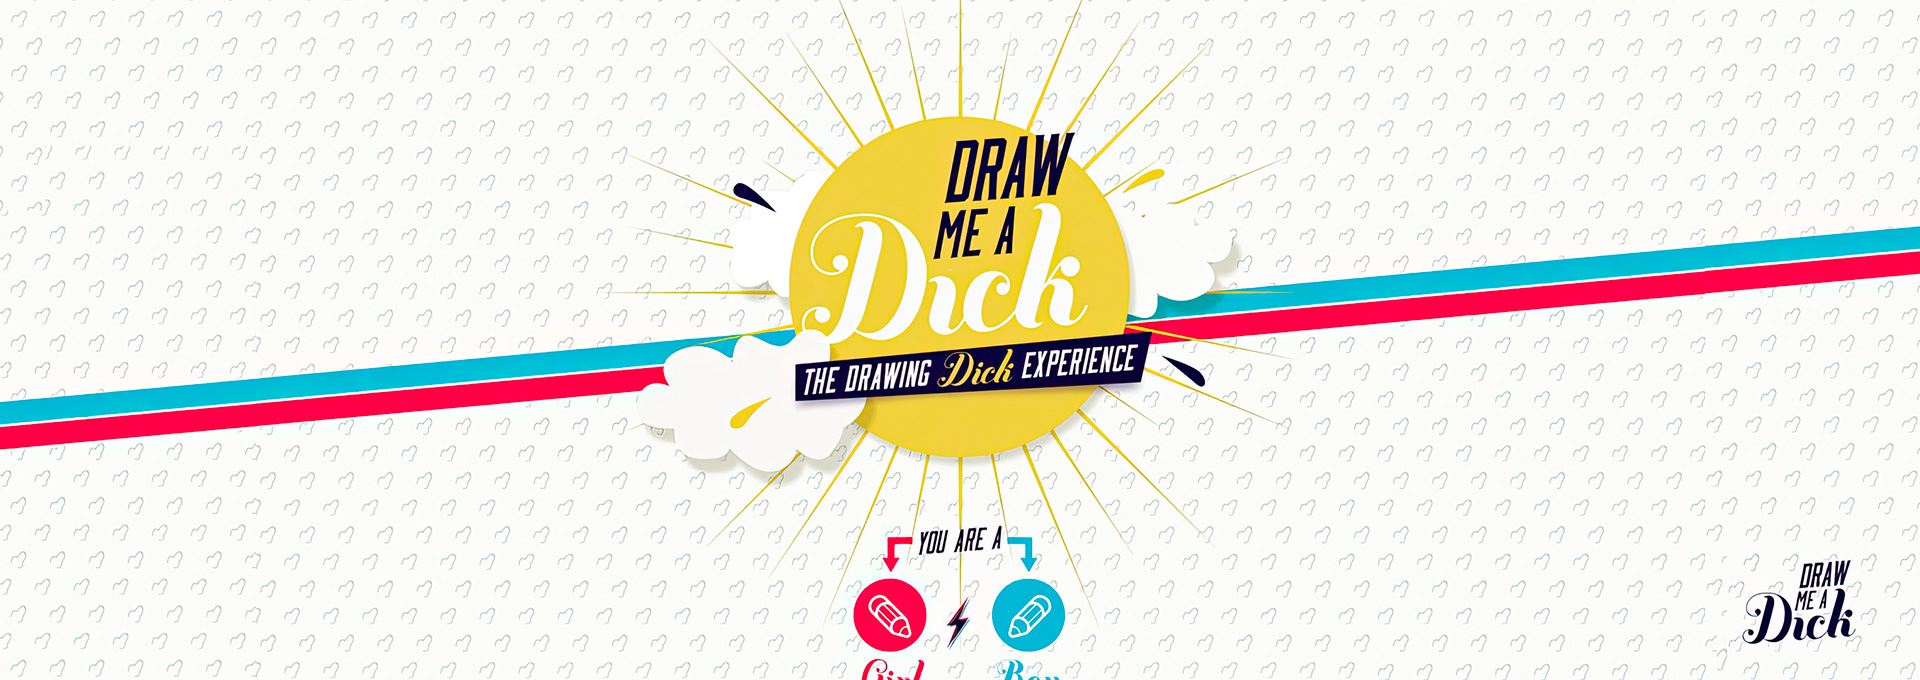 Draw Me A dick, design by Magali Souart & Fabio Soares